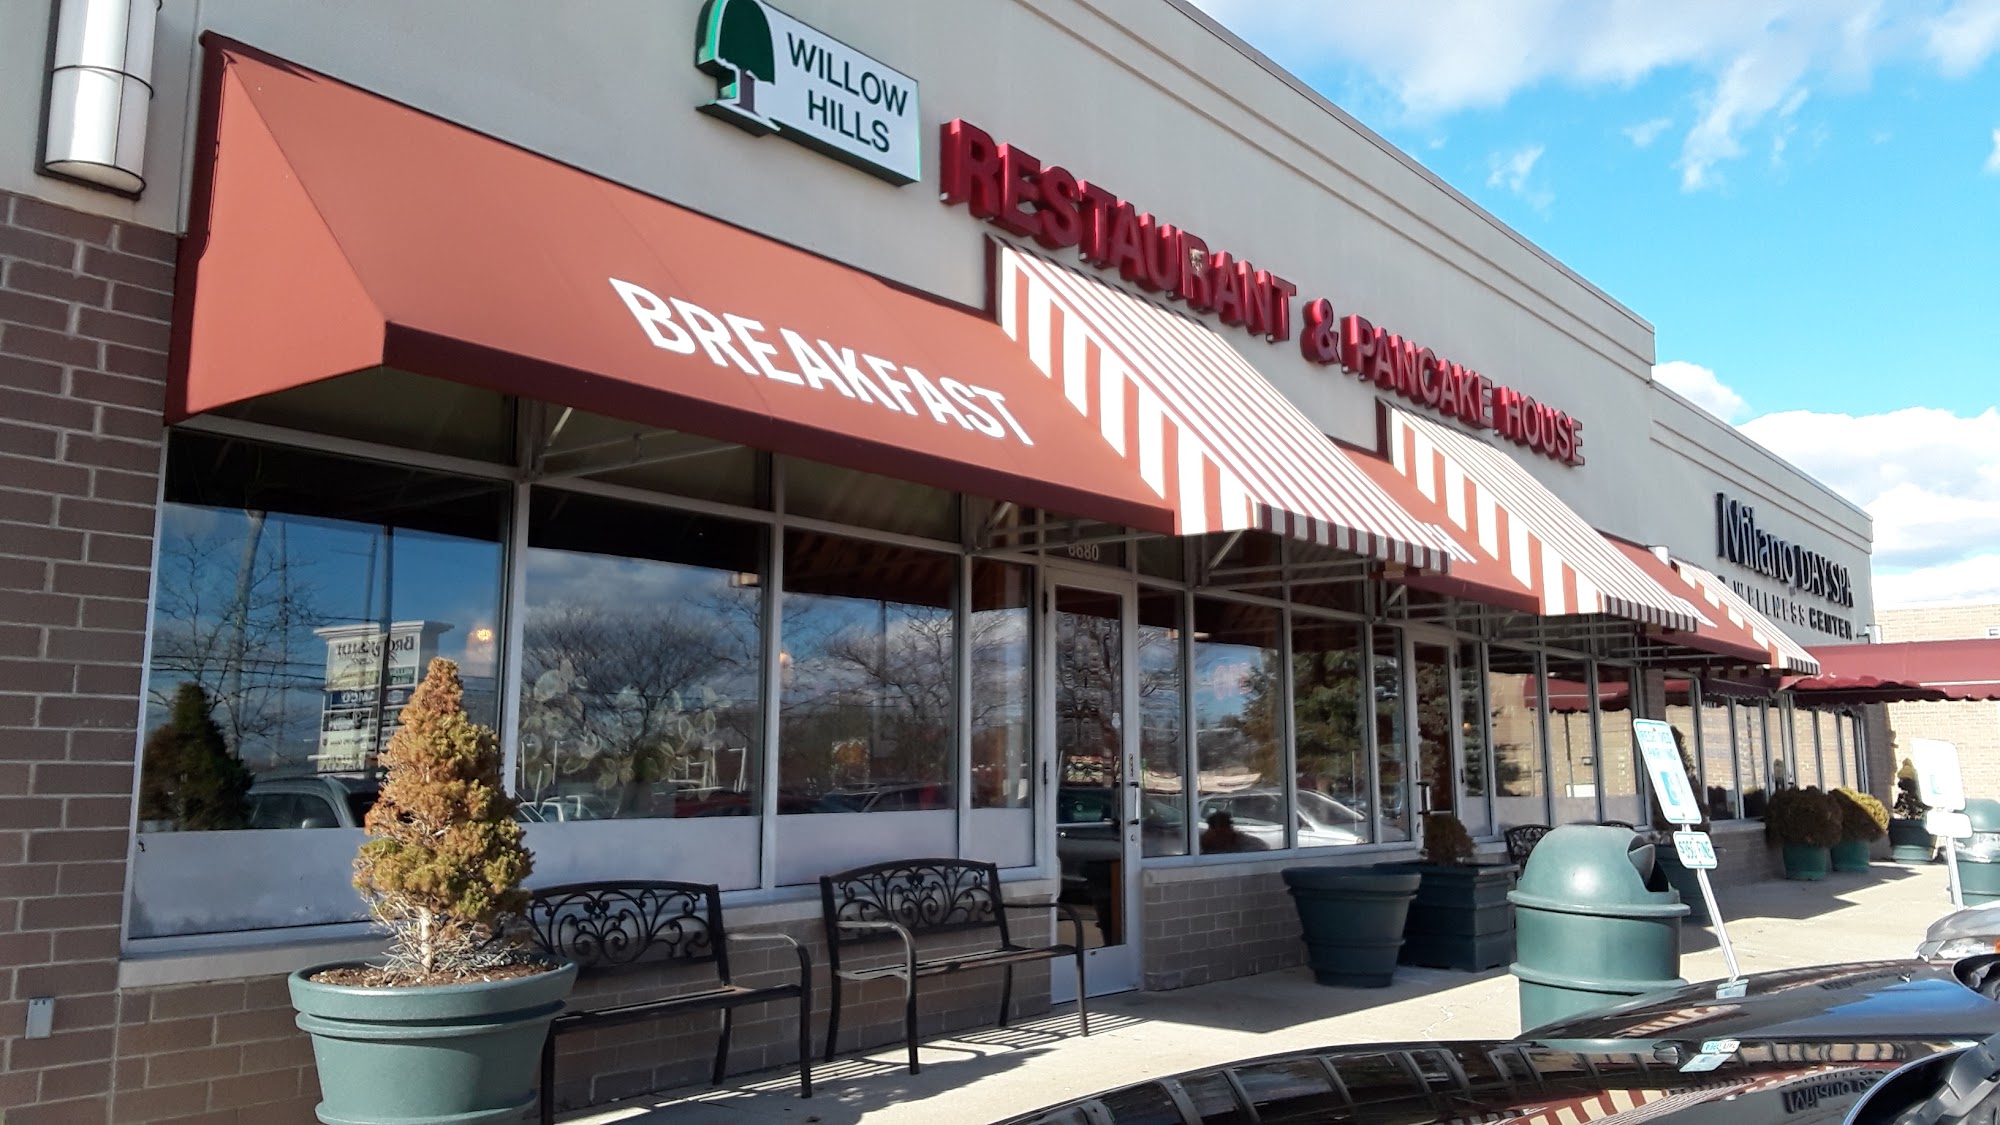 Willow Hills Restaurant